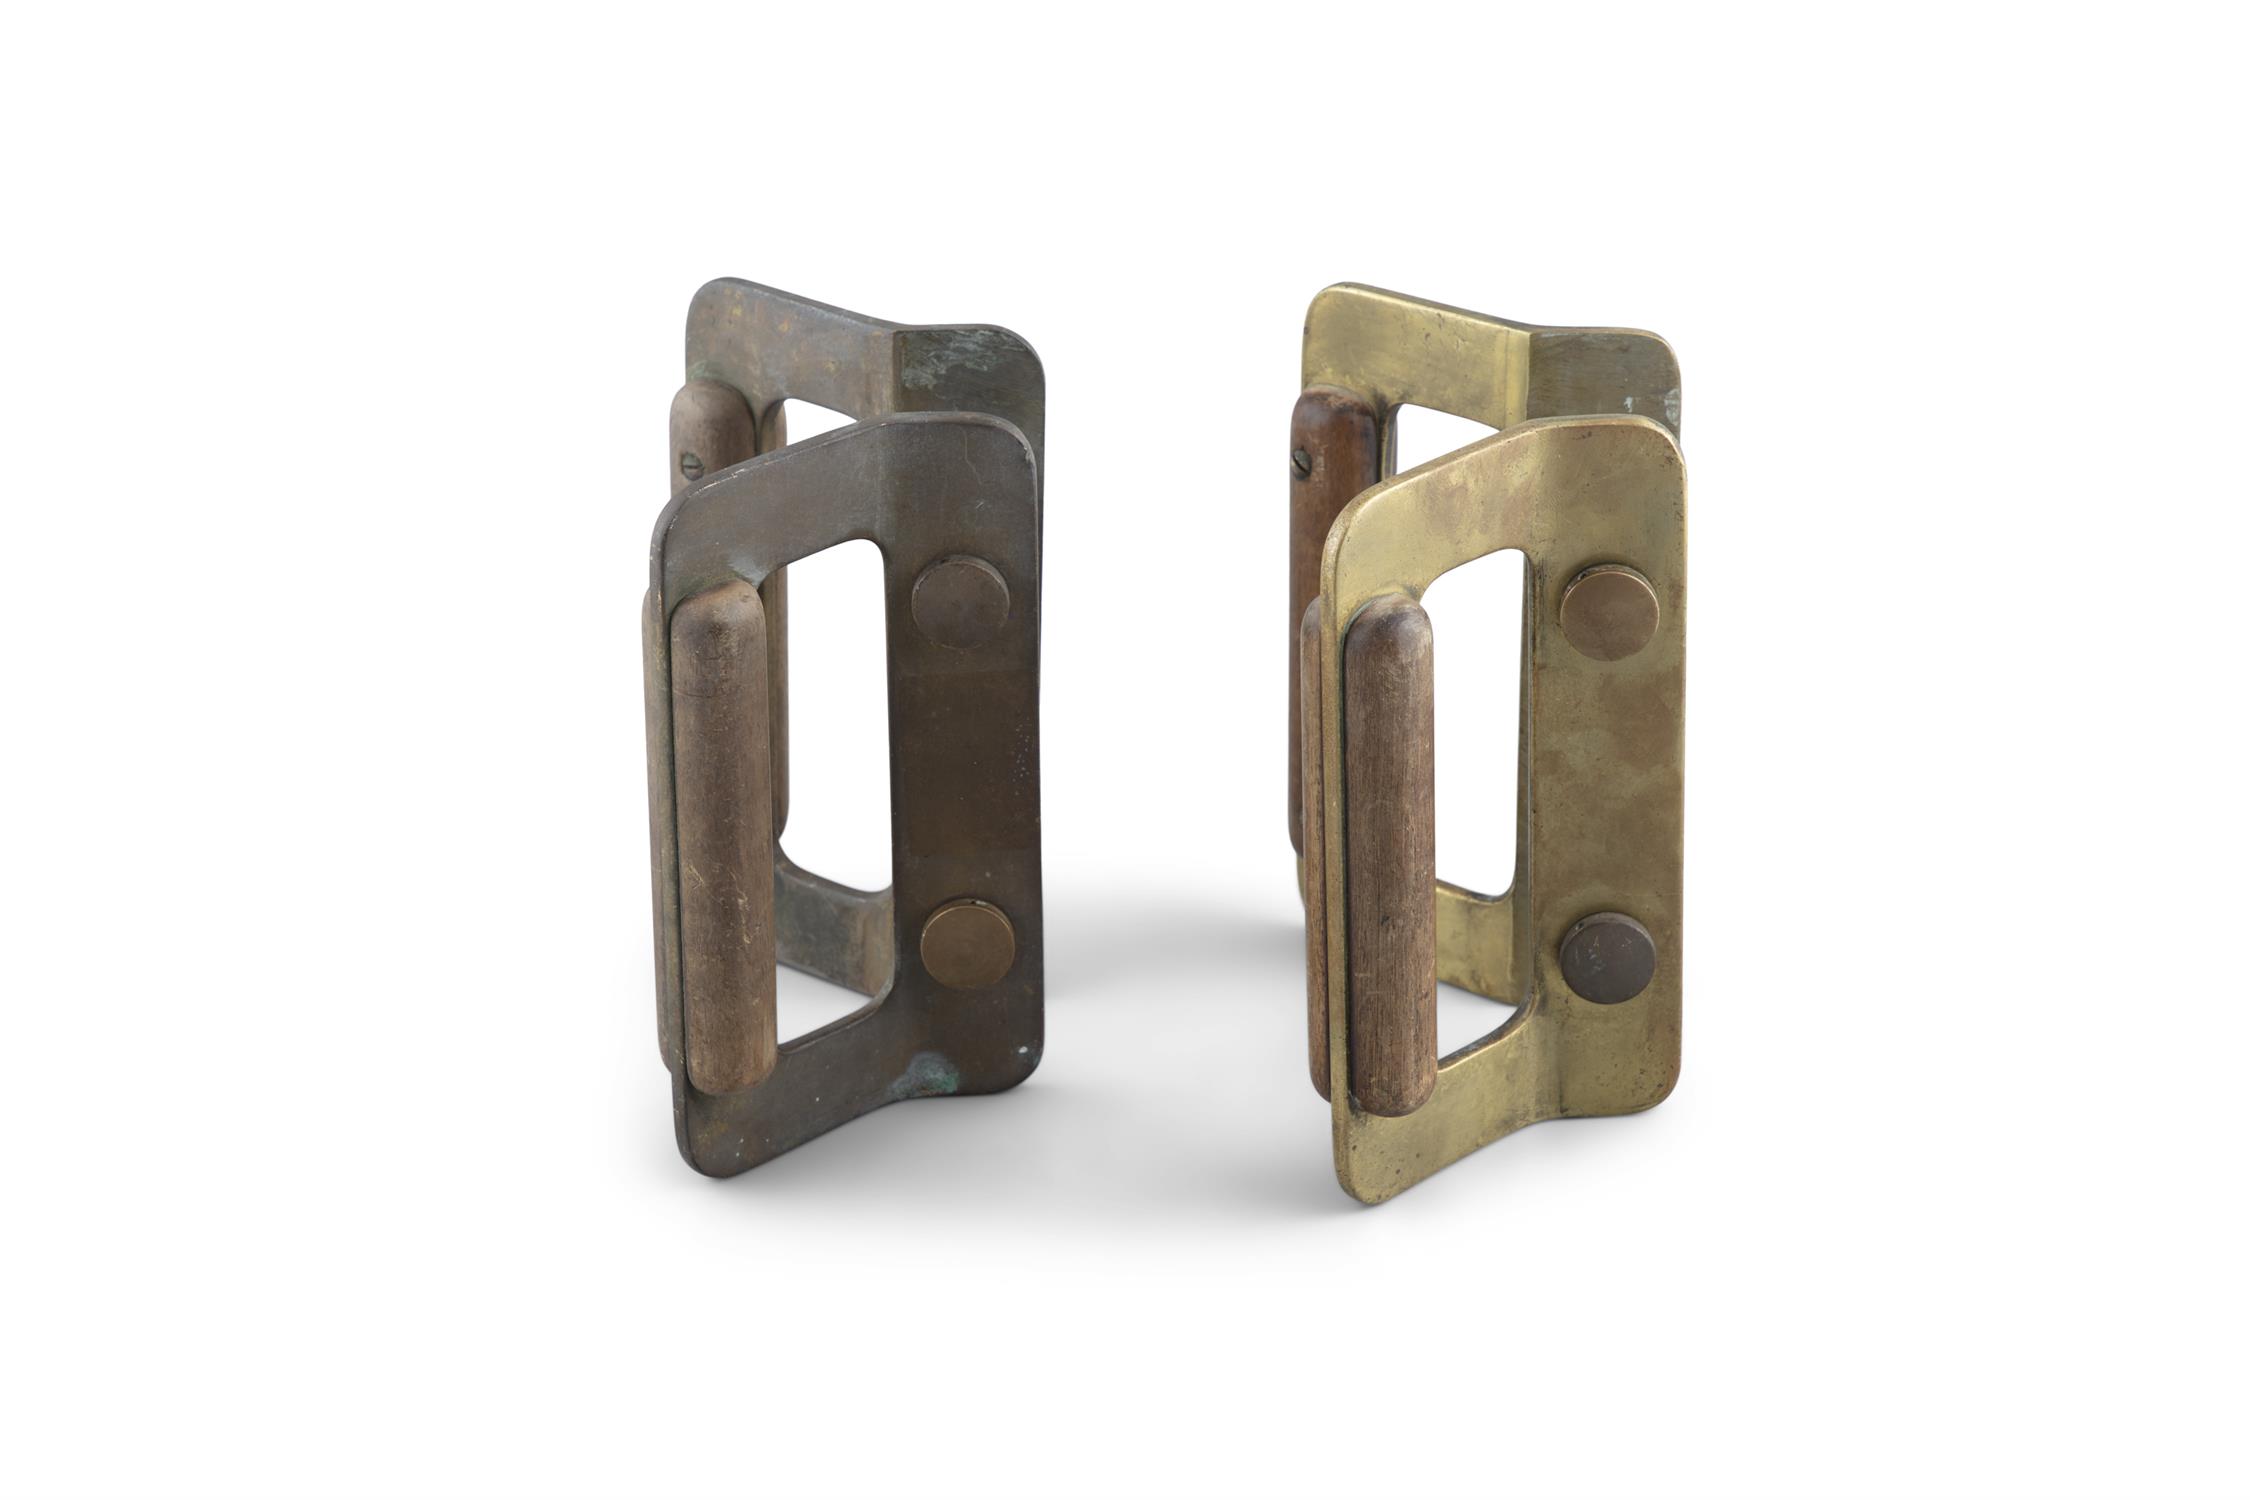 ITALO GAMBERINI (1907-1990) A pair of brass and wood door handles, by Italo Gamberini, Italy c.1940. - Image 2 of 5